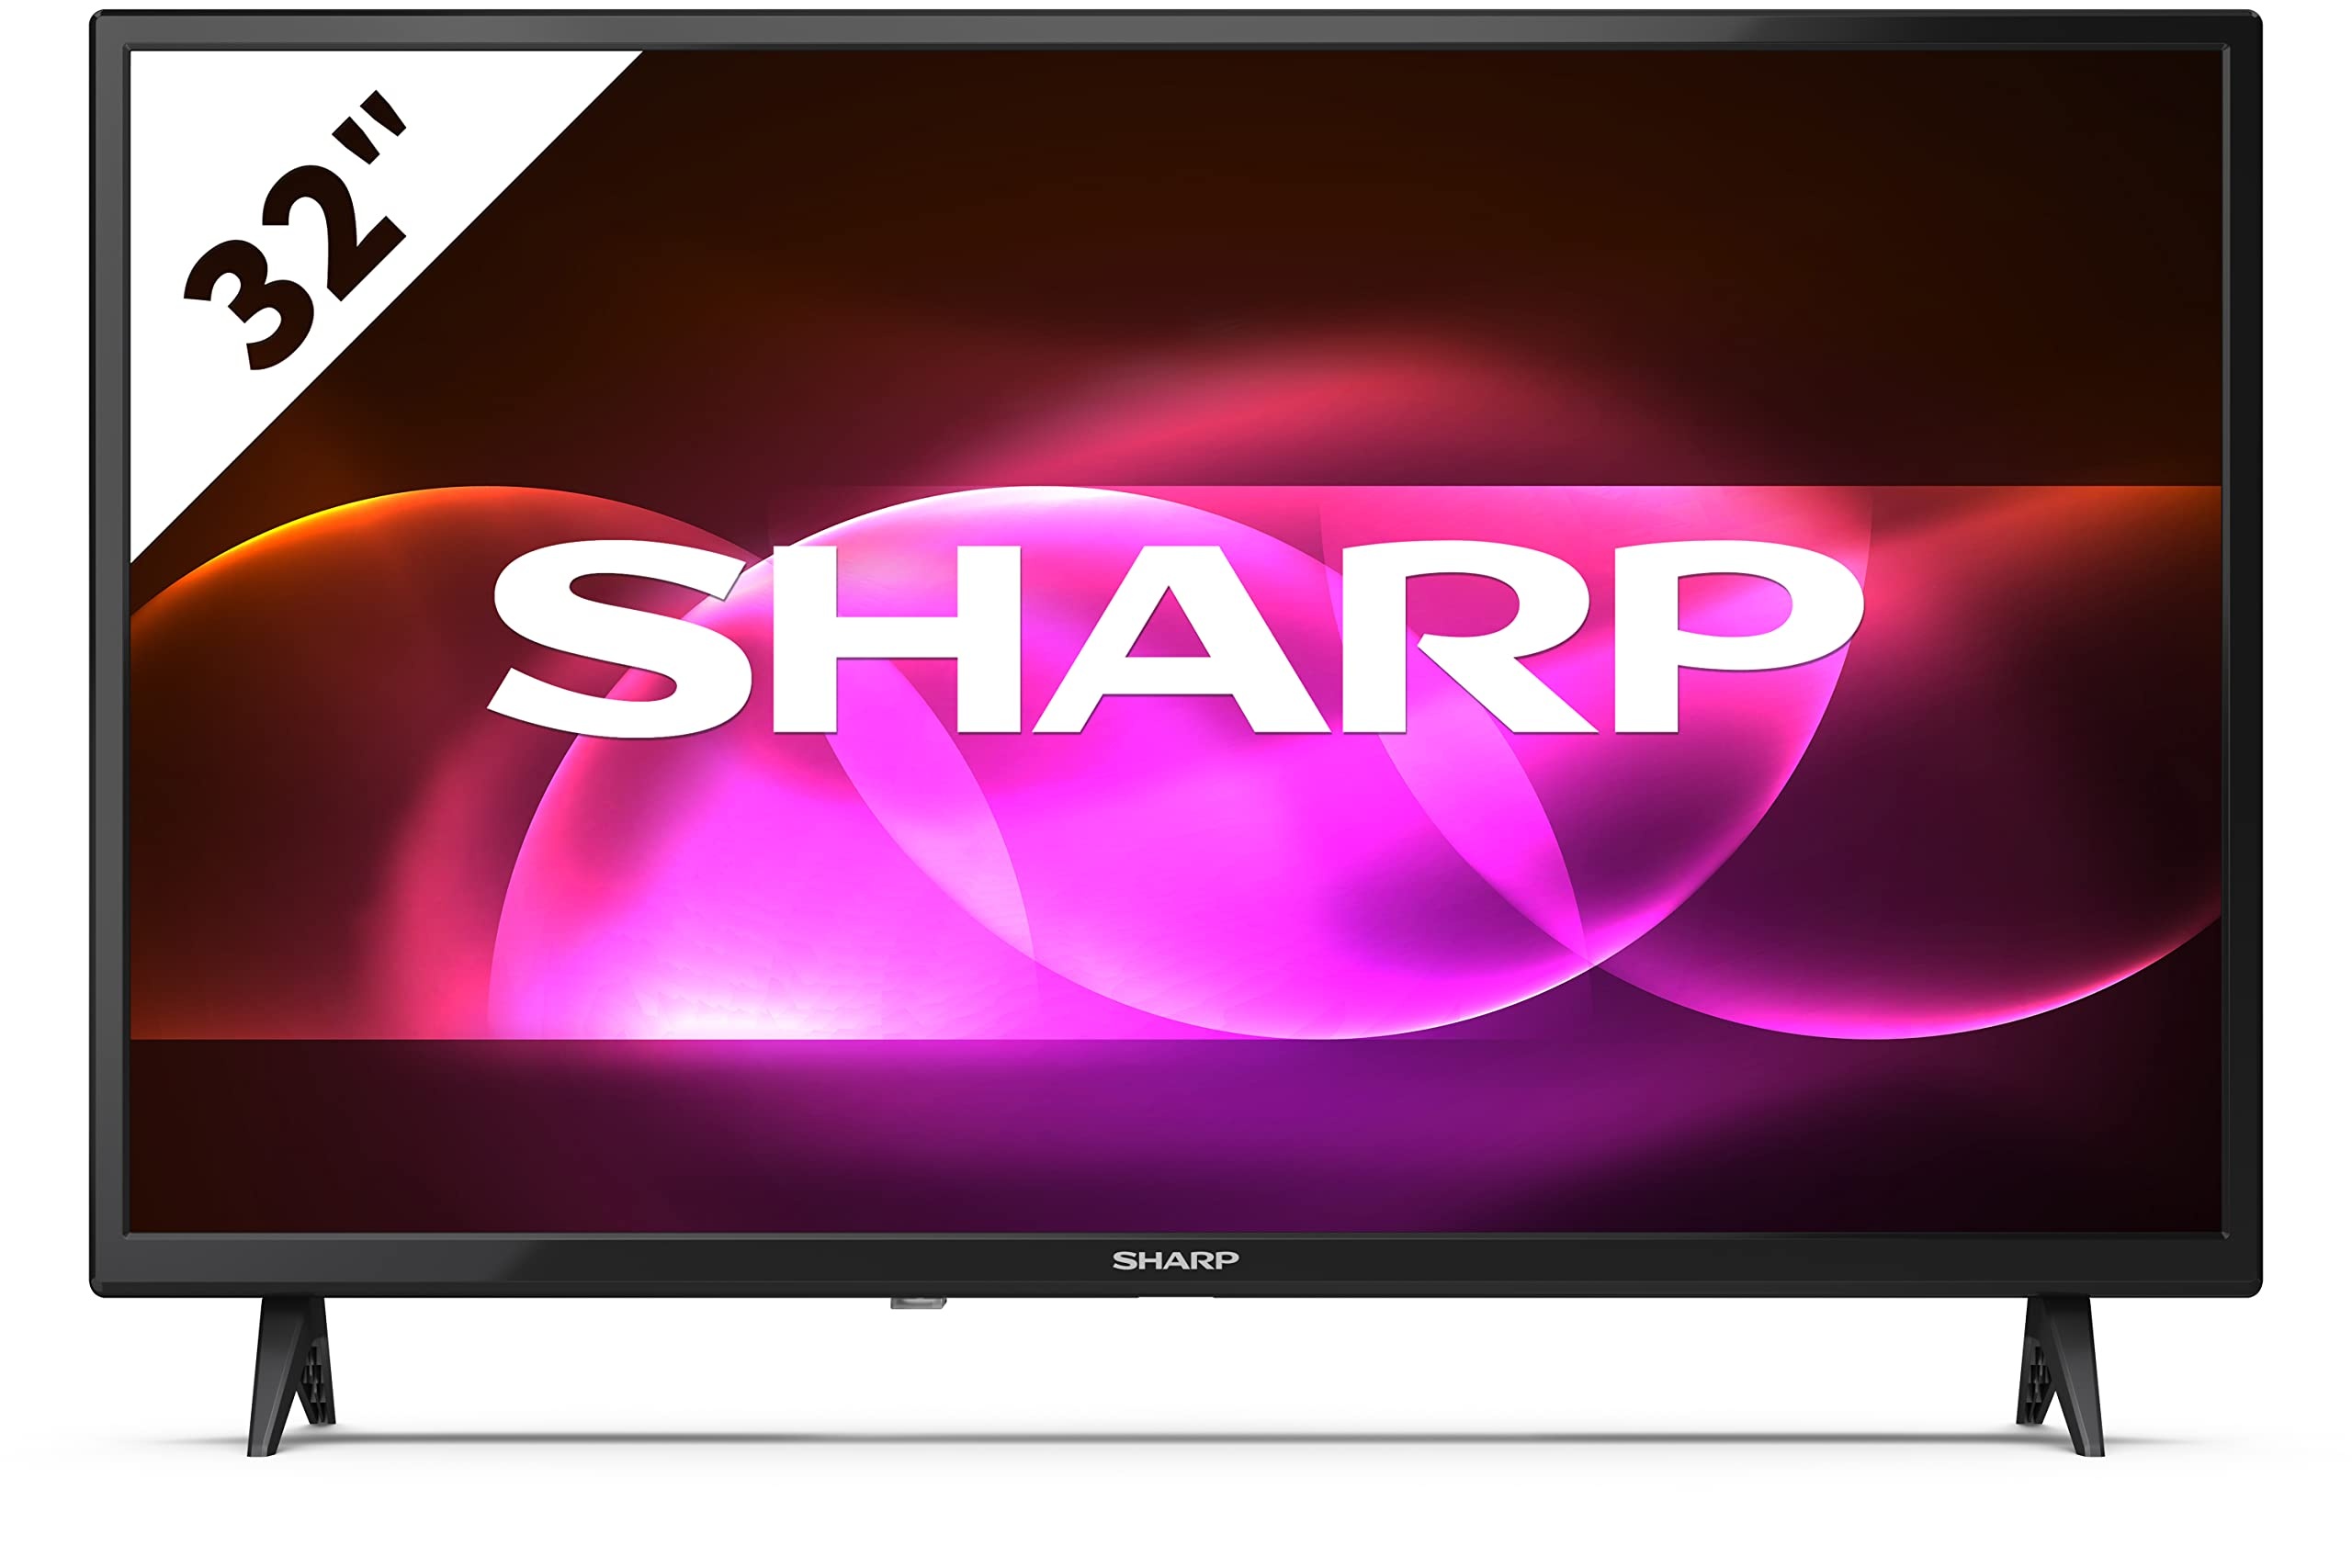 SHARP 32FA6E HD Ready LED Fernseher 81 cm (32 Zoll), Schwarz [Energieklasse E]